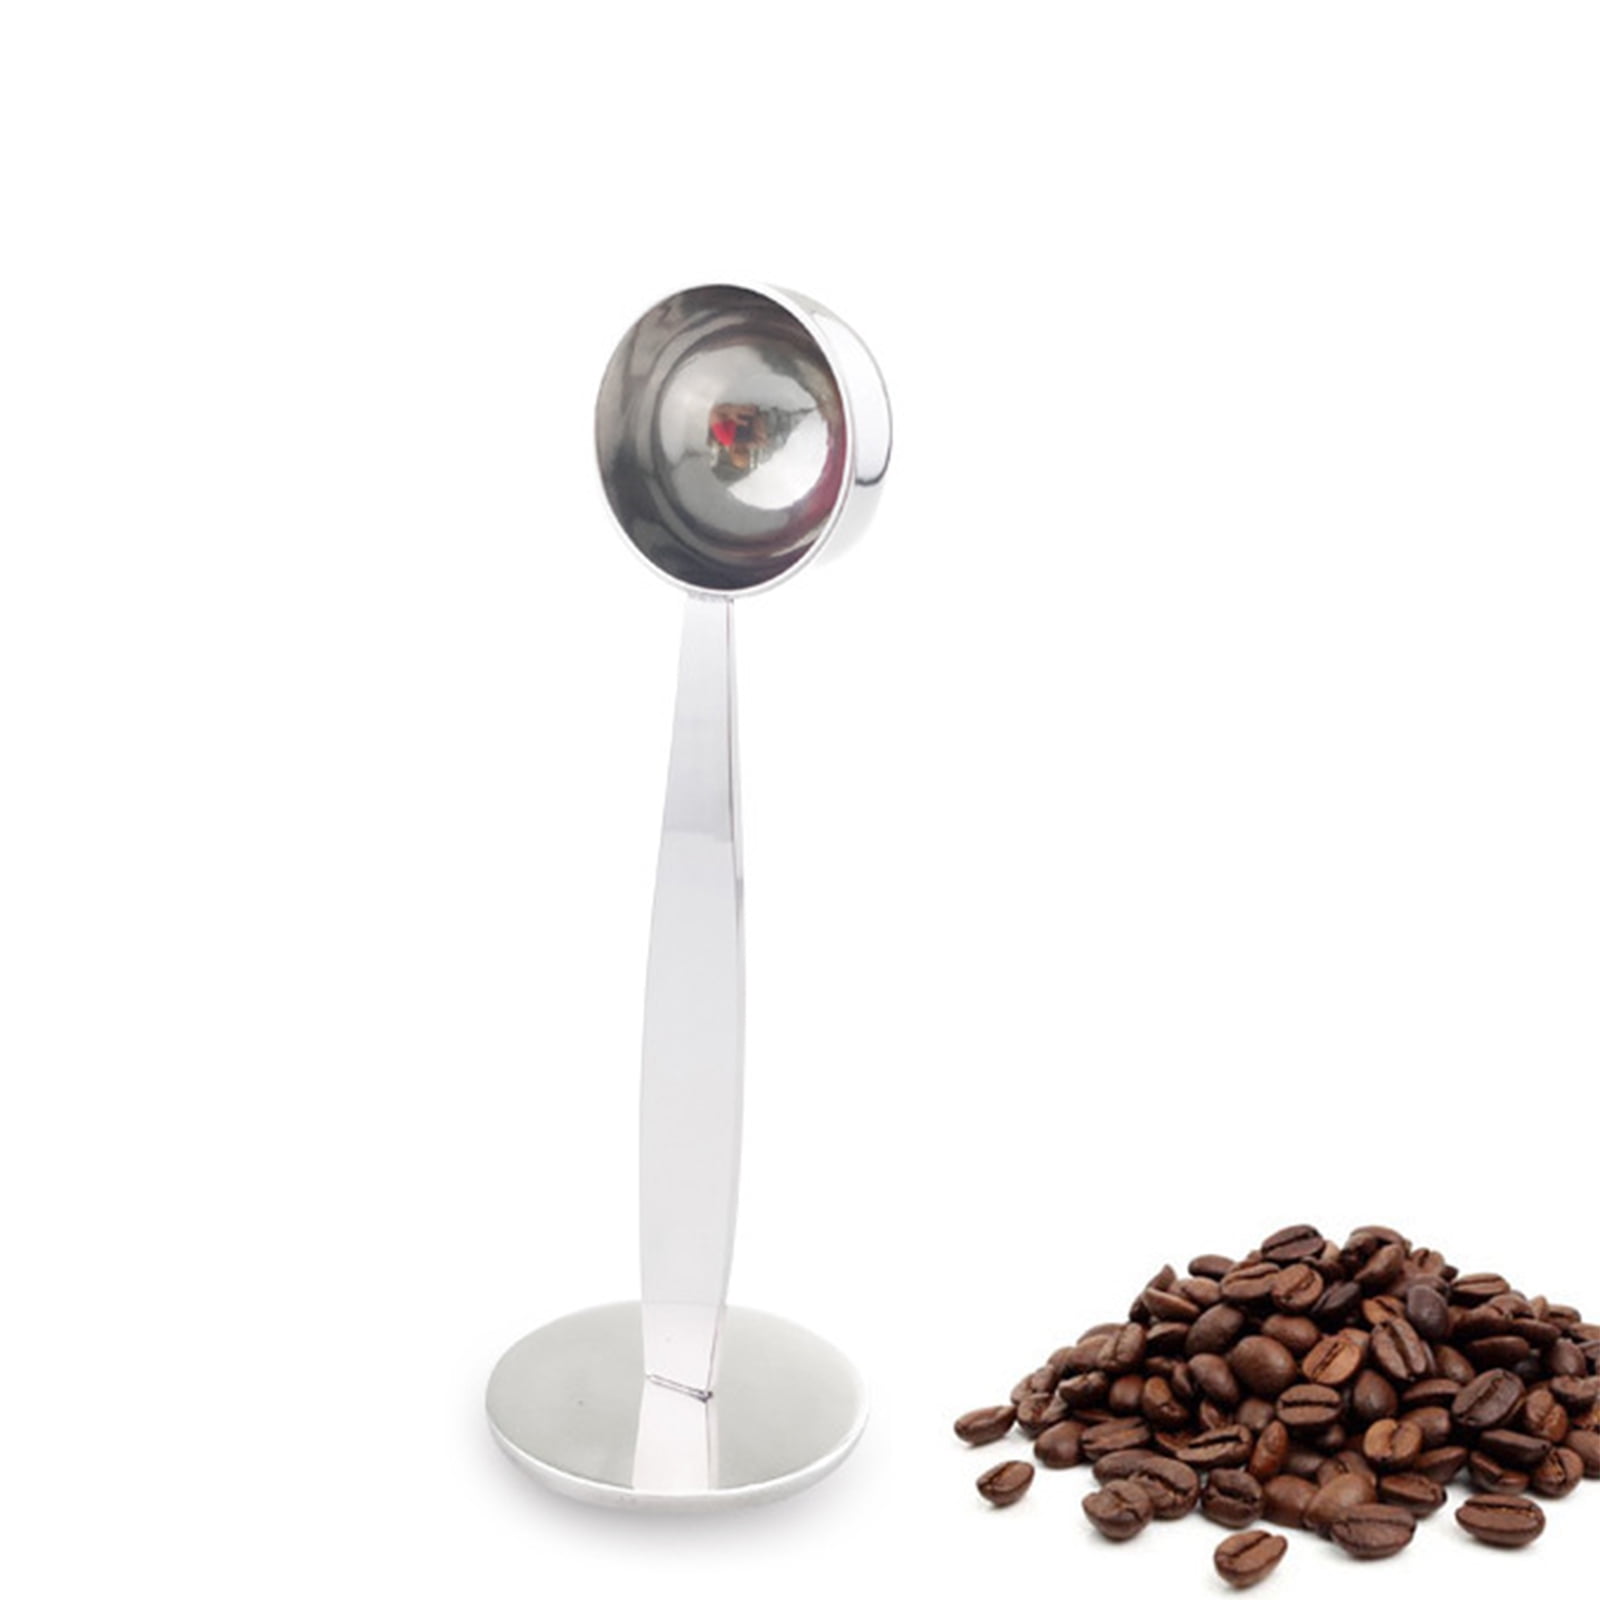 Details about   Coffee Espresso Scoop Plastic Measuring Spoon Tamper Press Tool 10g Black 